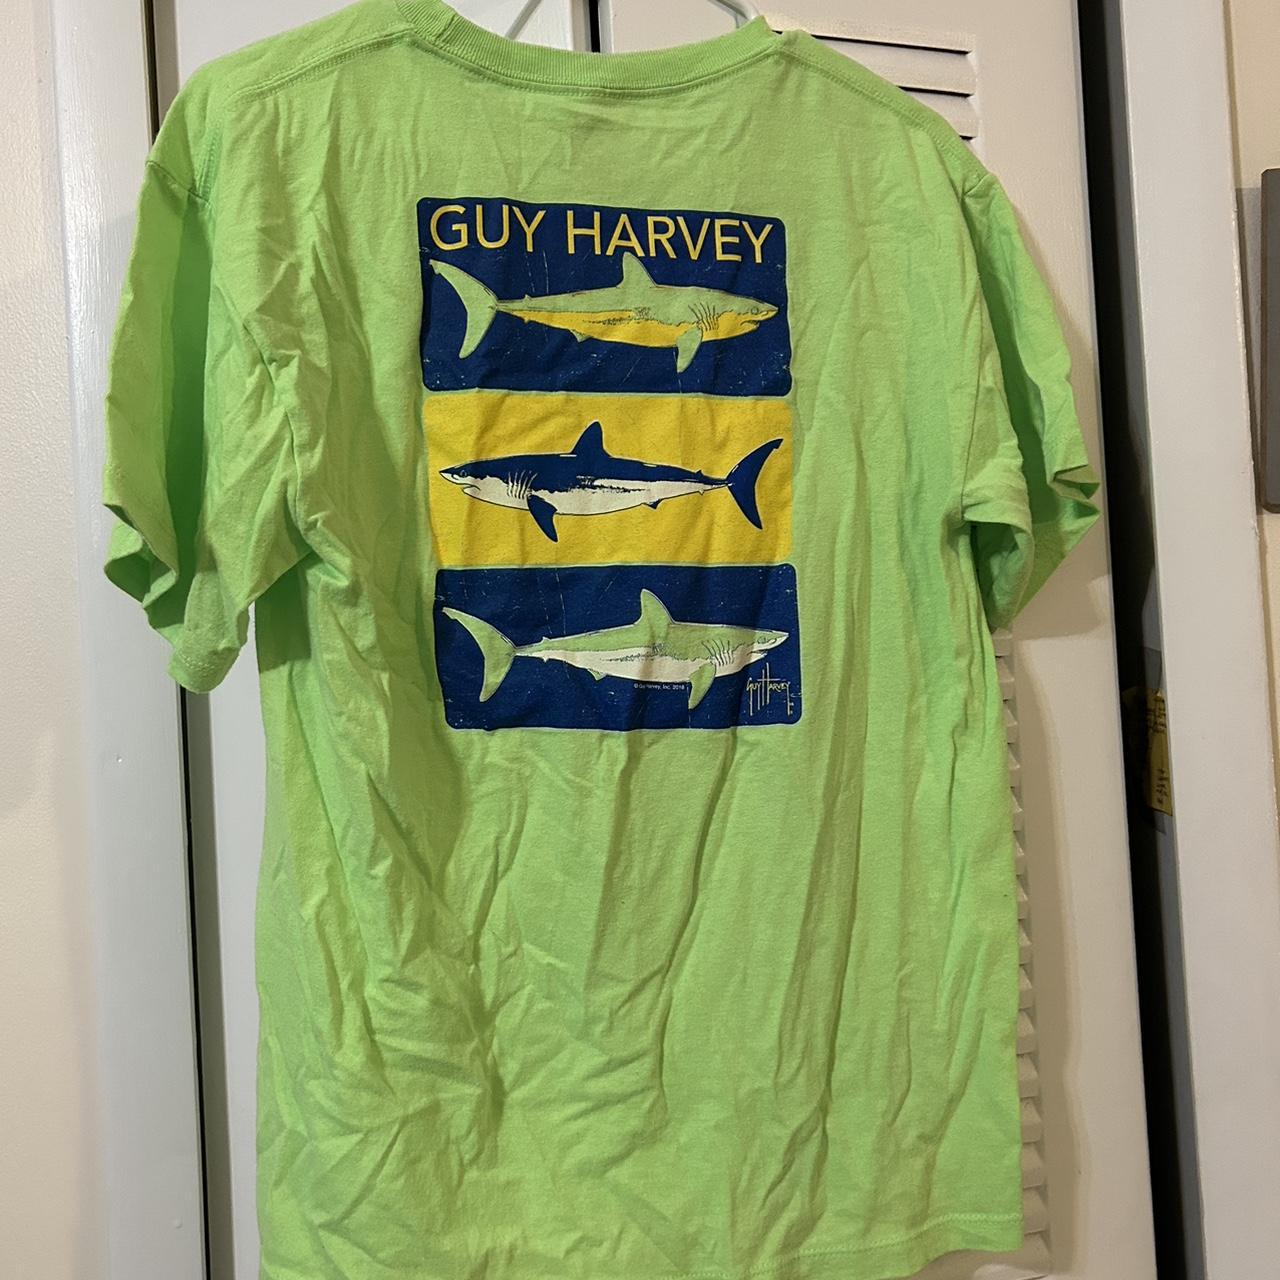 Guy Harvey Women's Green Shirt (2)